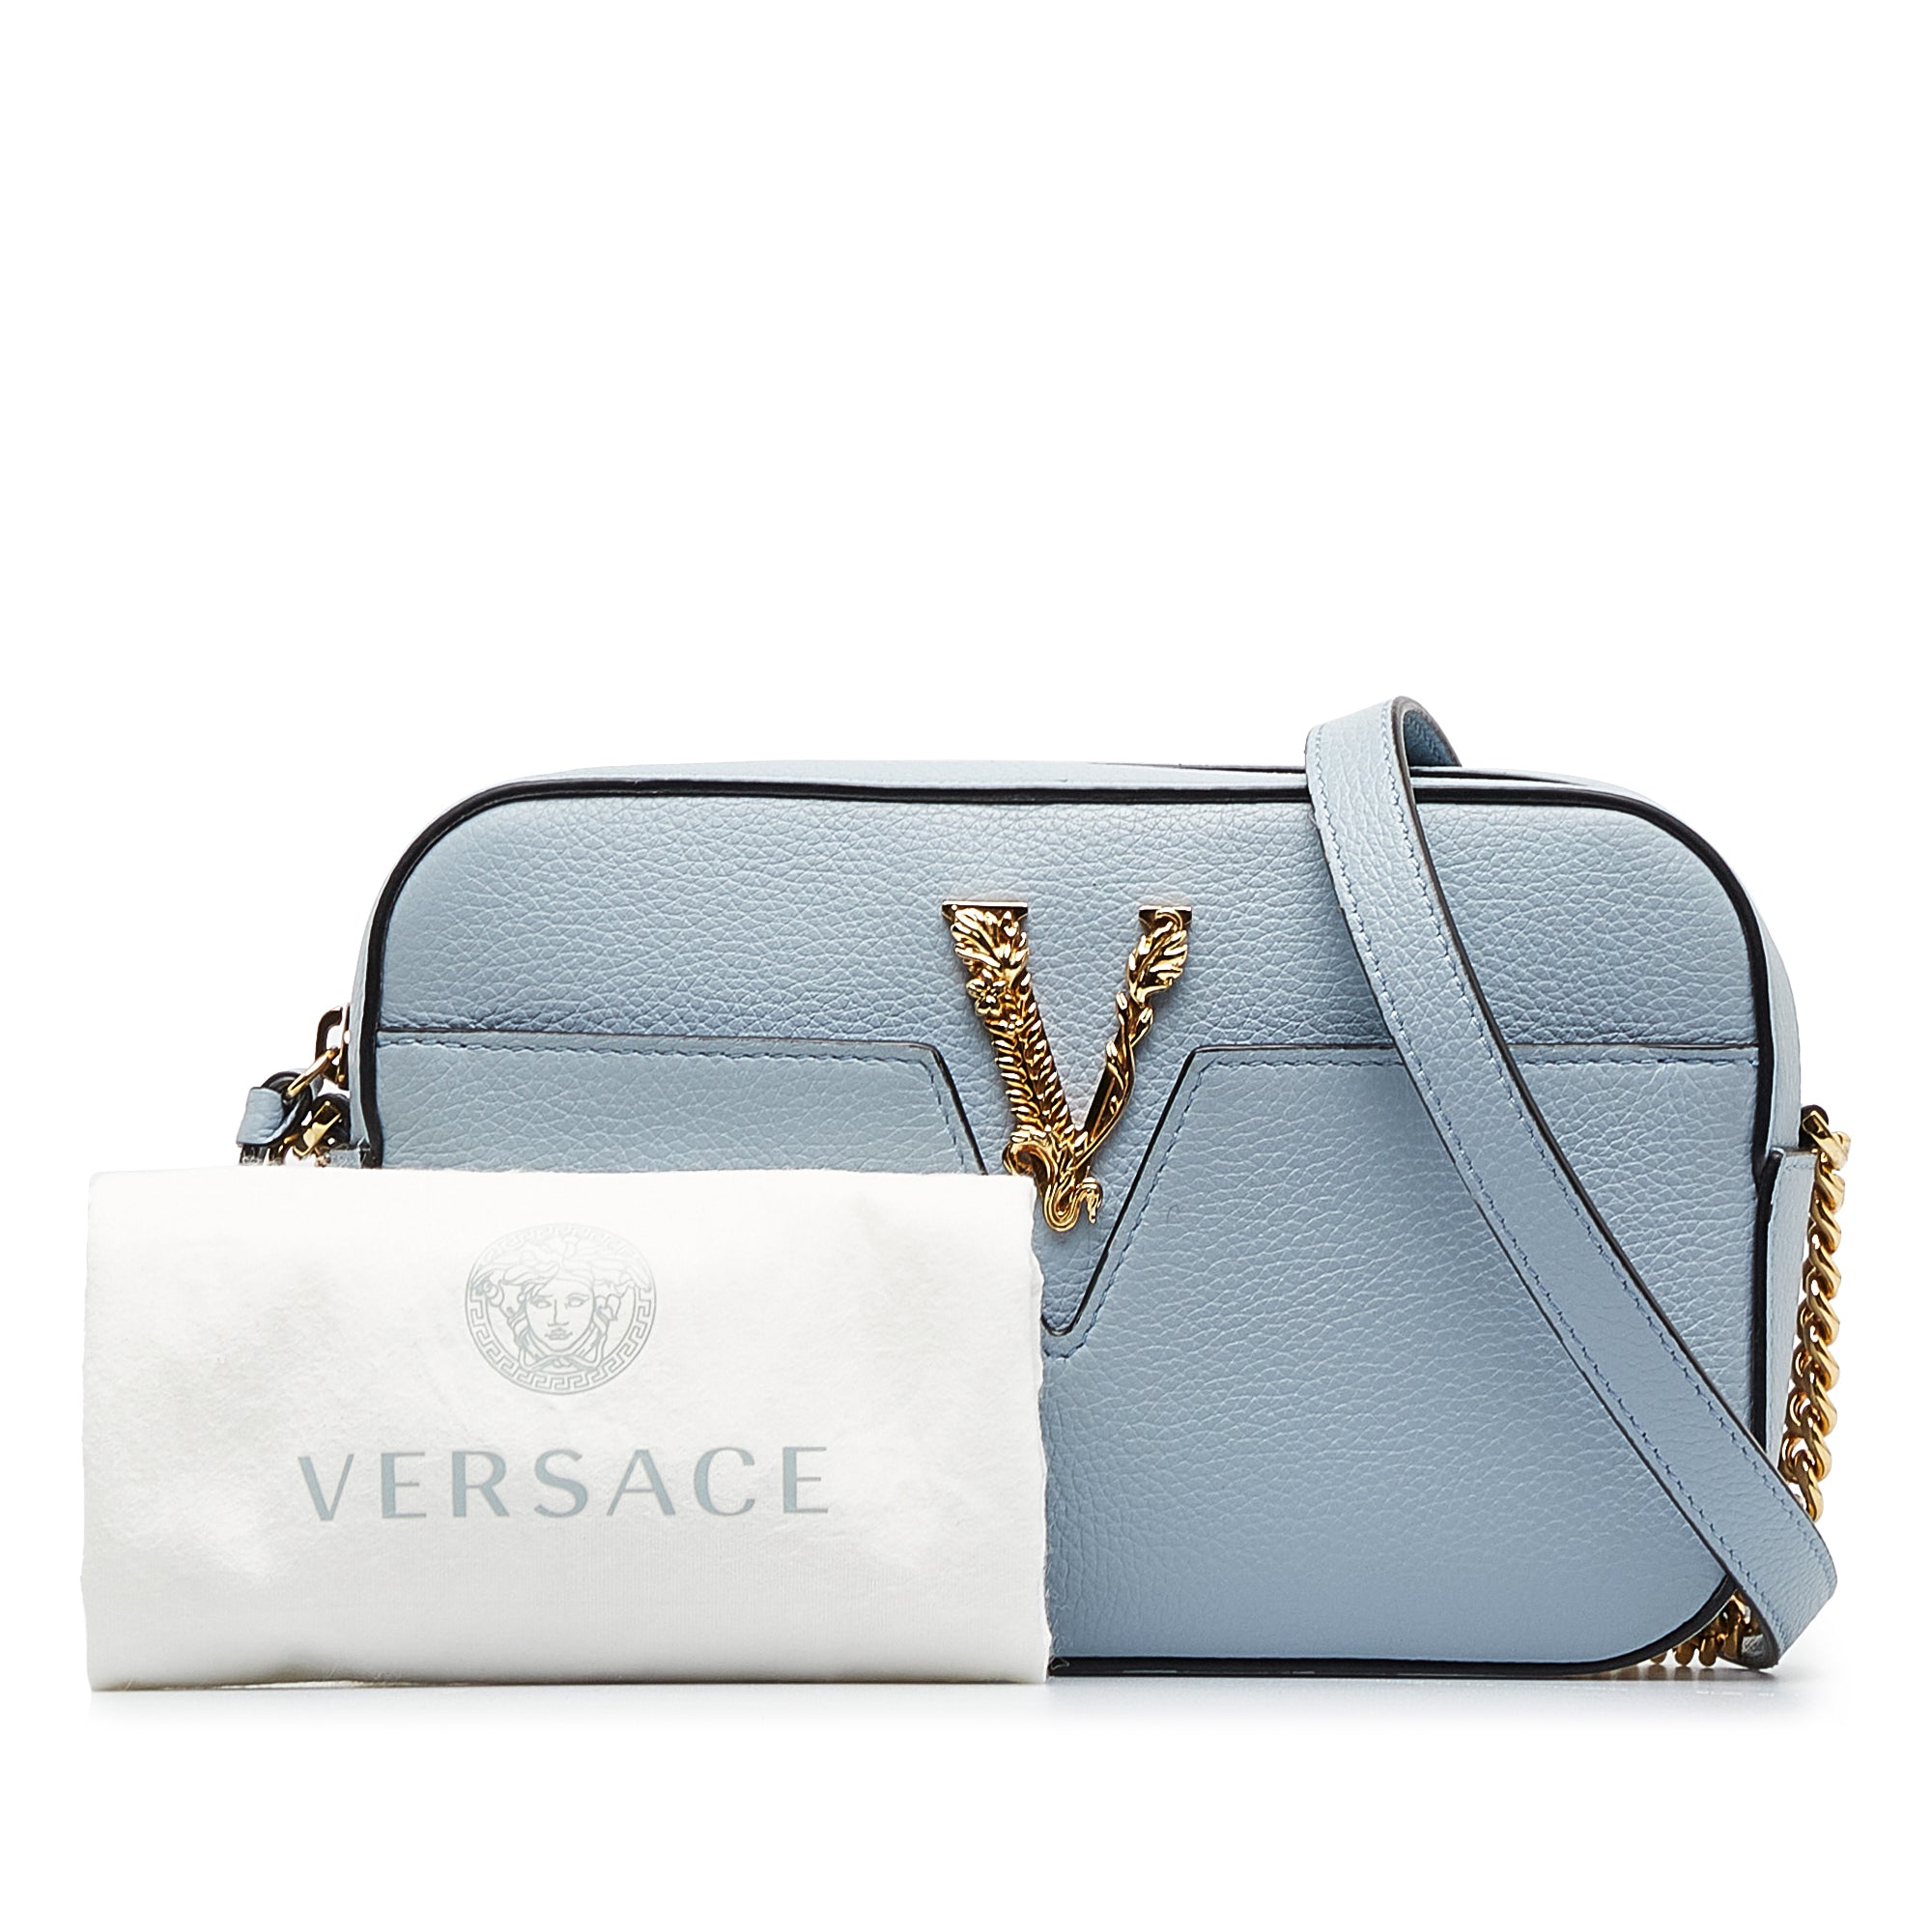 Shop Versace, Palazzo, Virtus, Medusa Bags & More